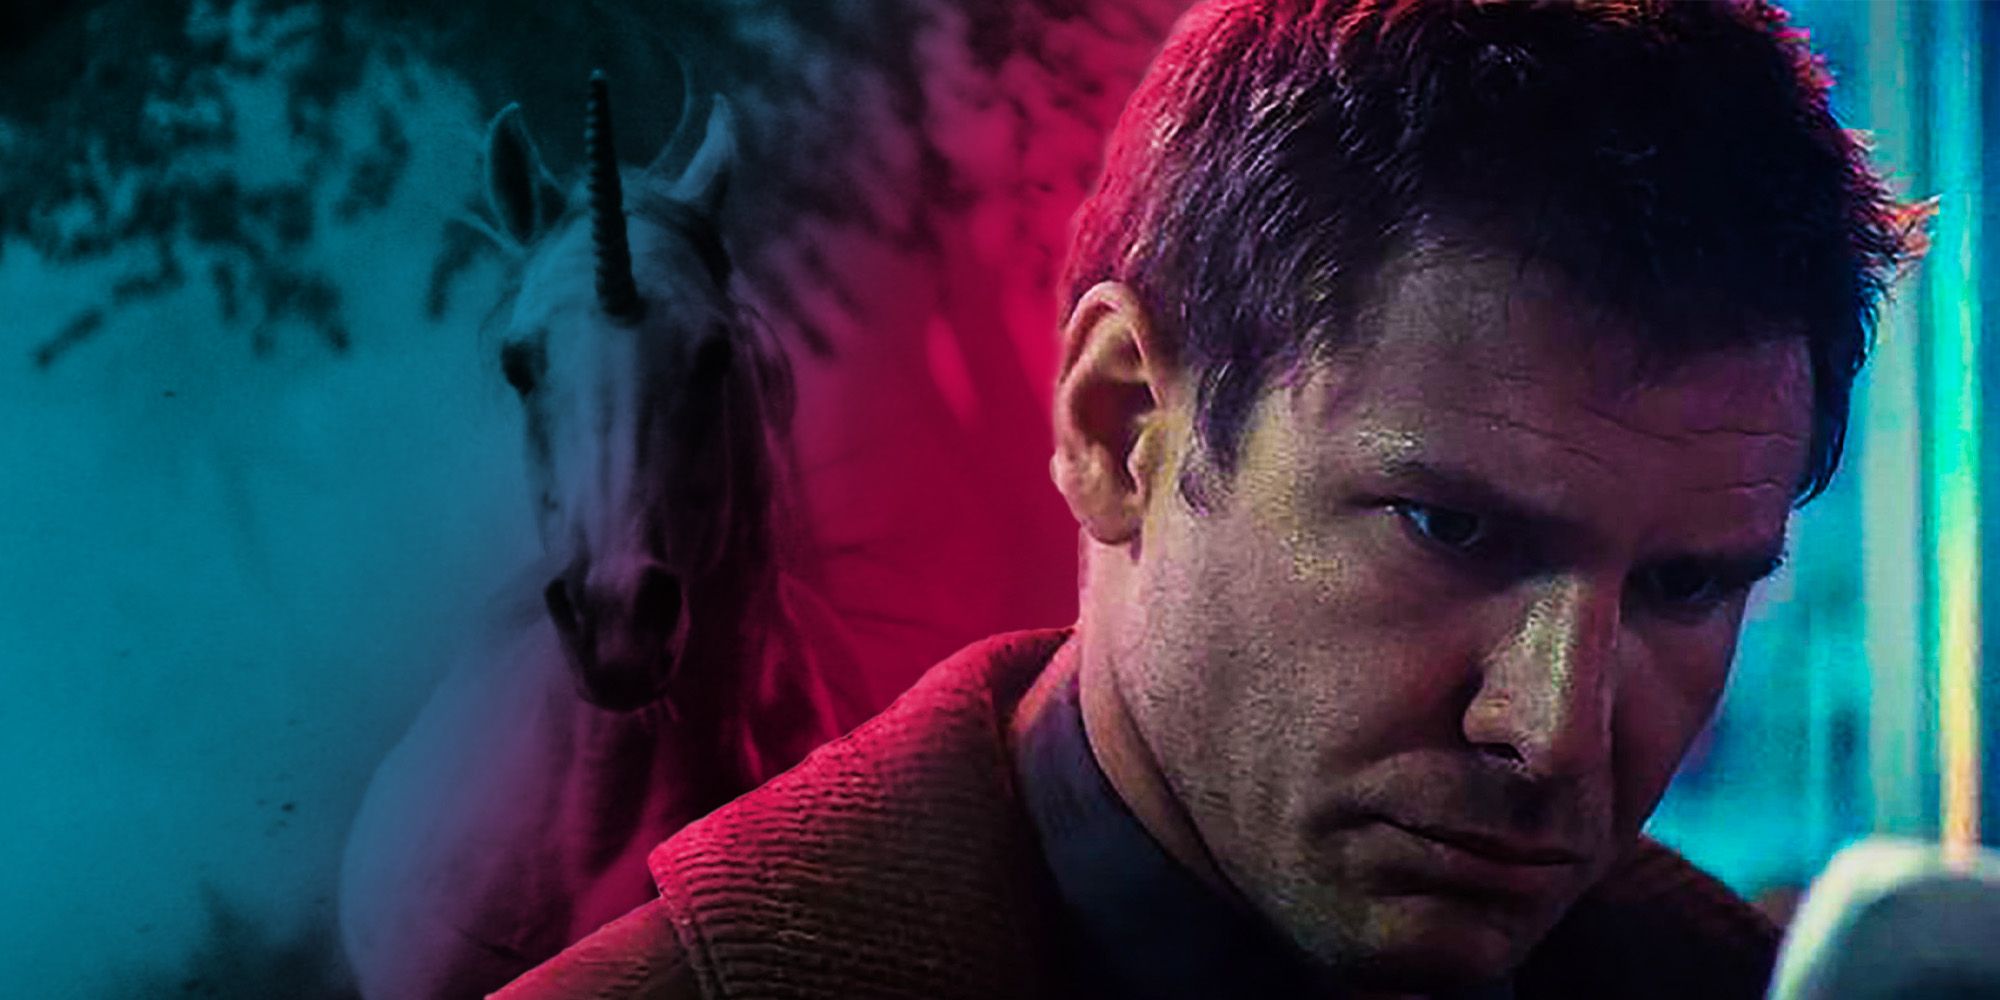 Blade Runner Deckards Unicorn Dream Sequence Explained